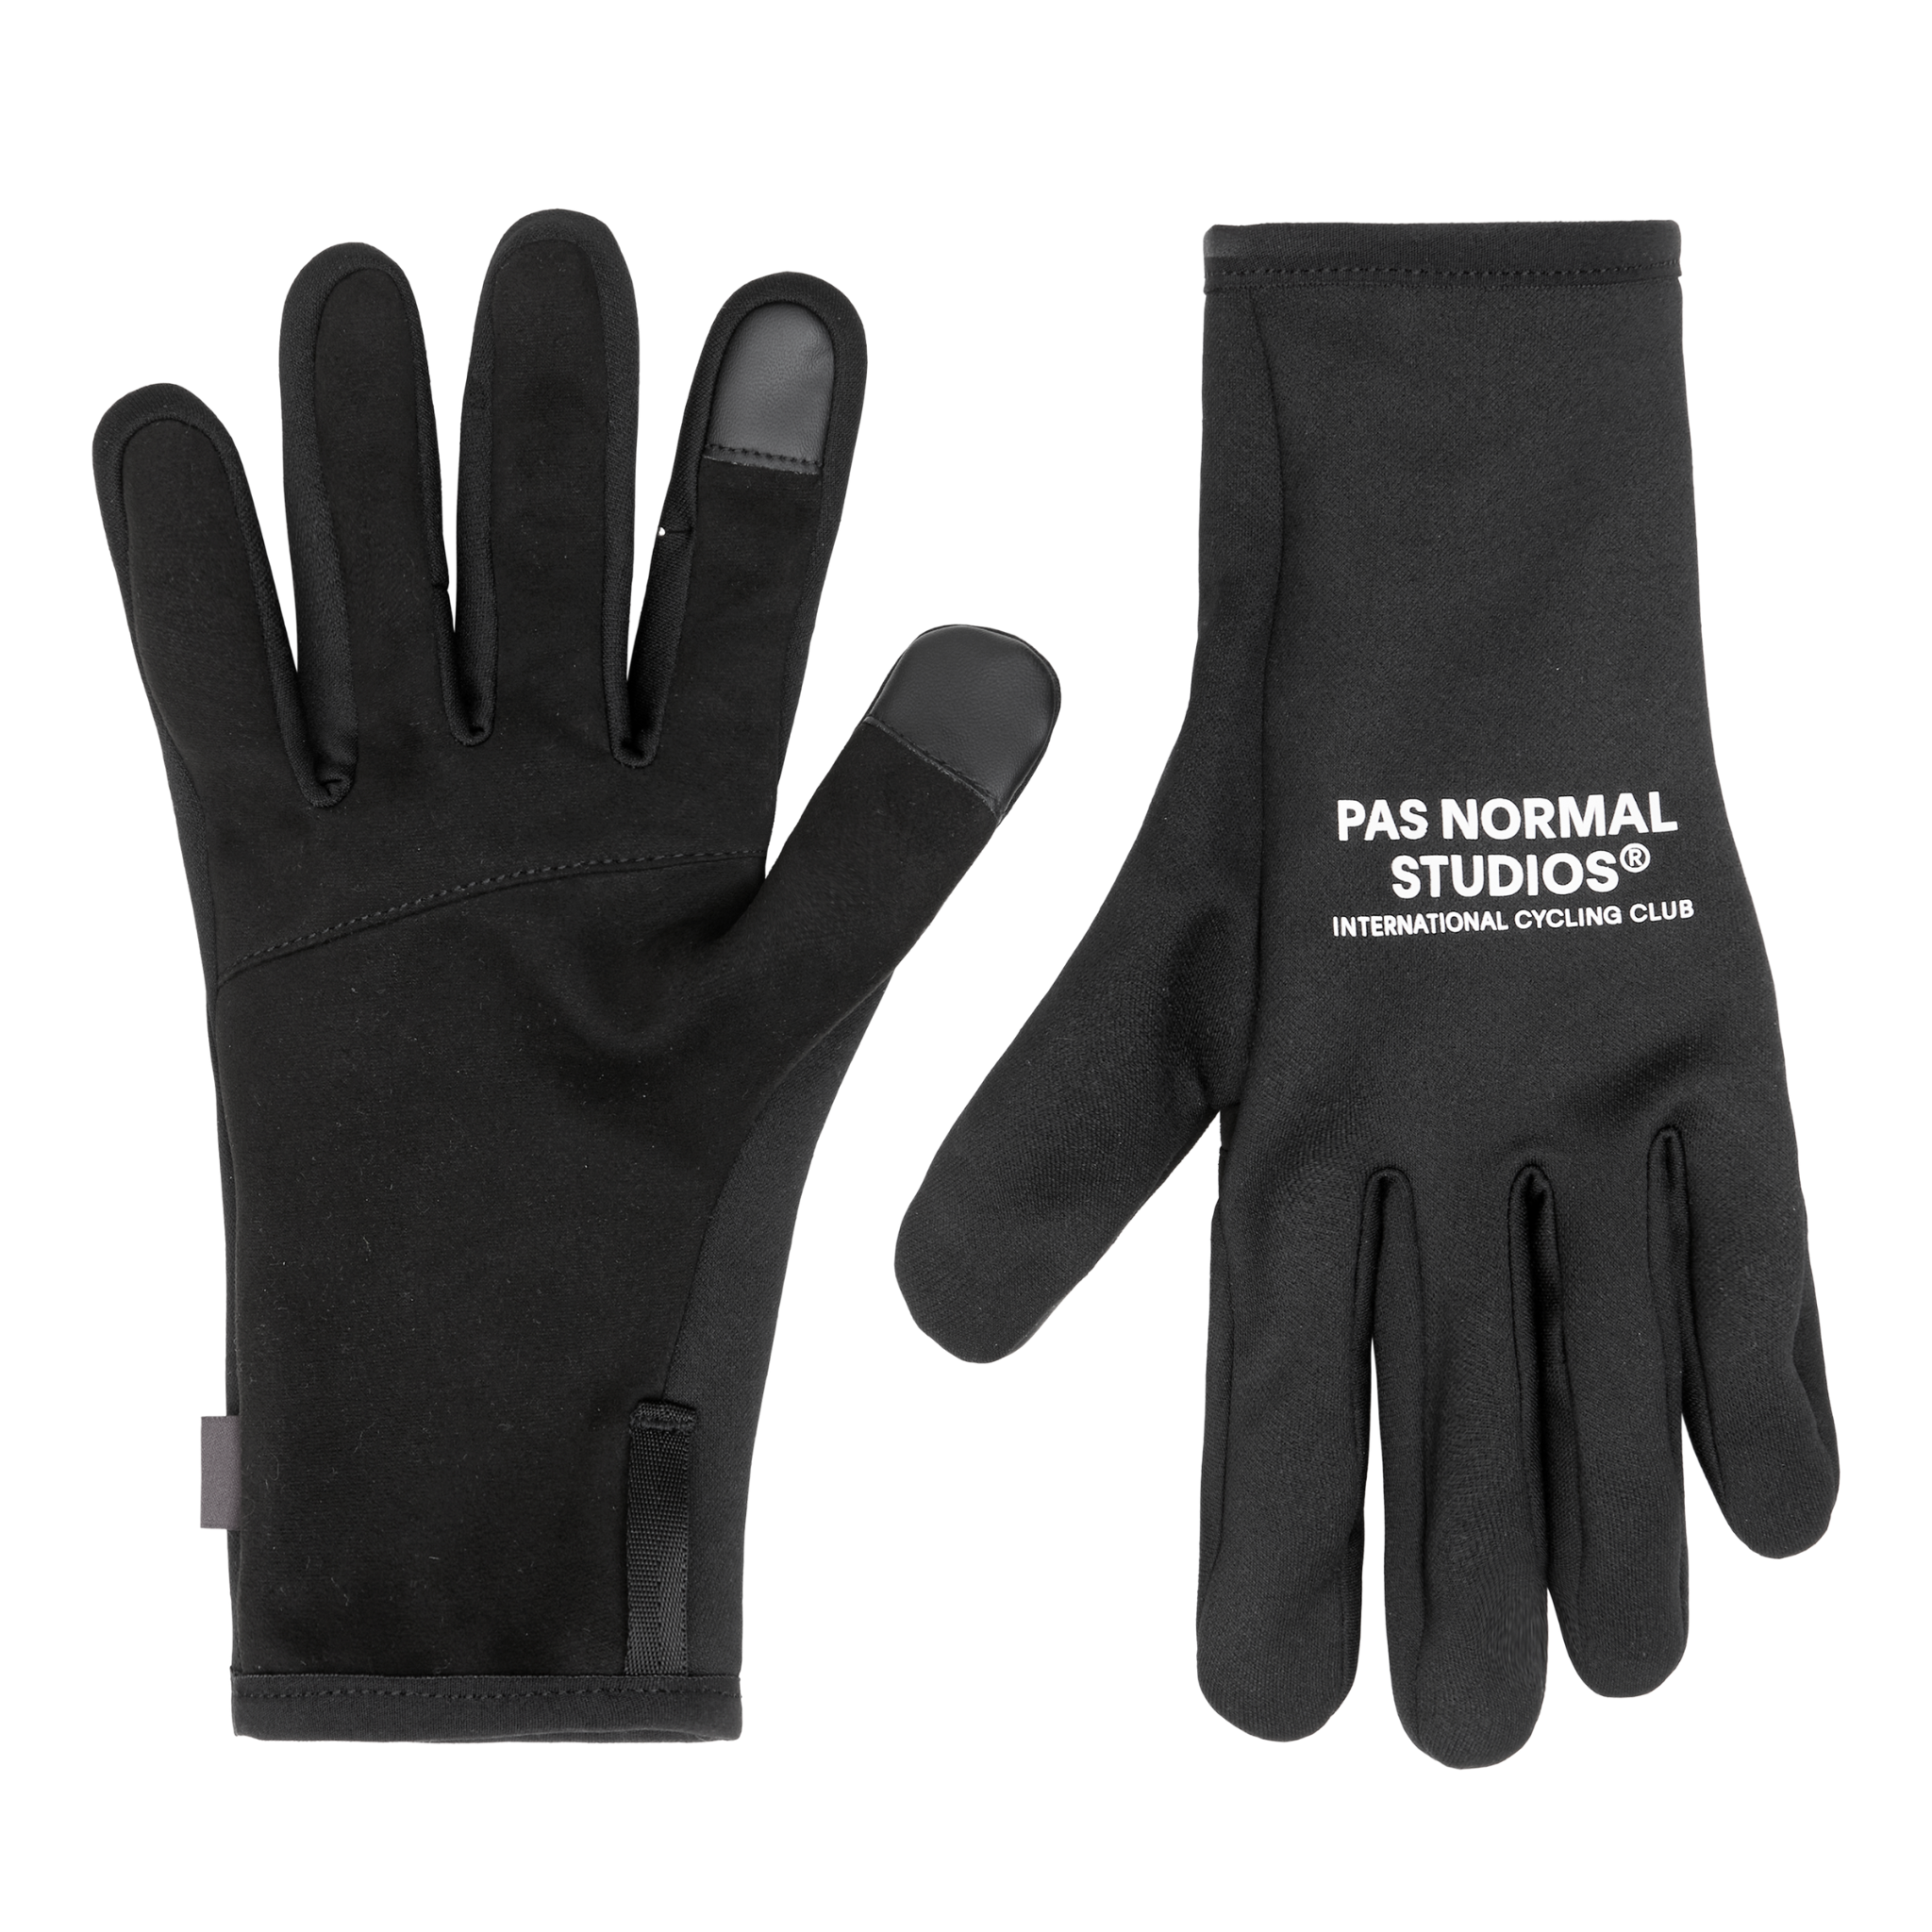 Deep Winter Gloves - Black